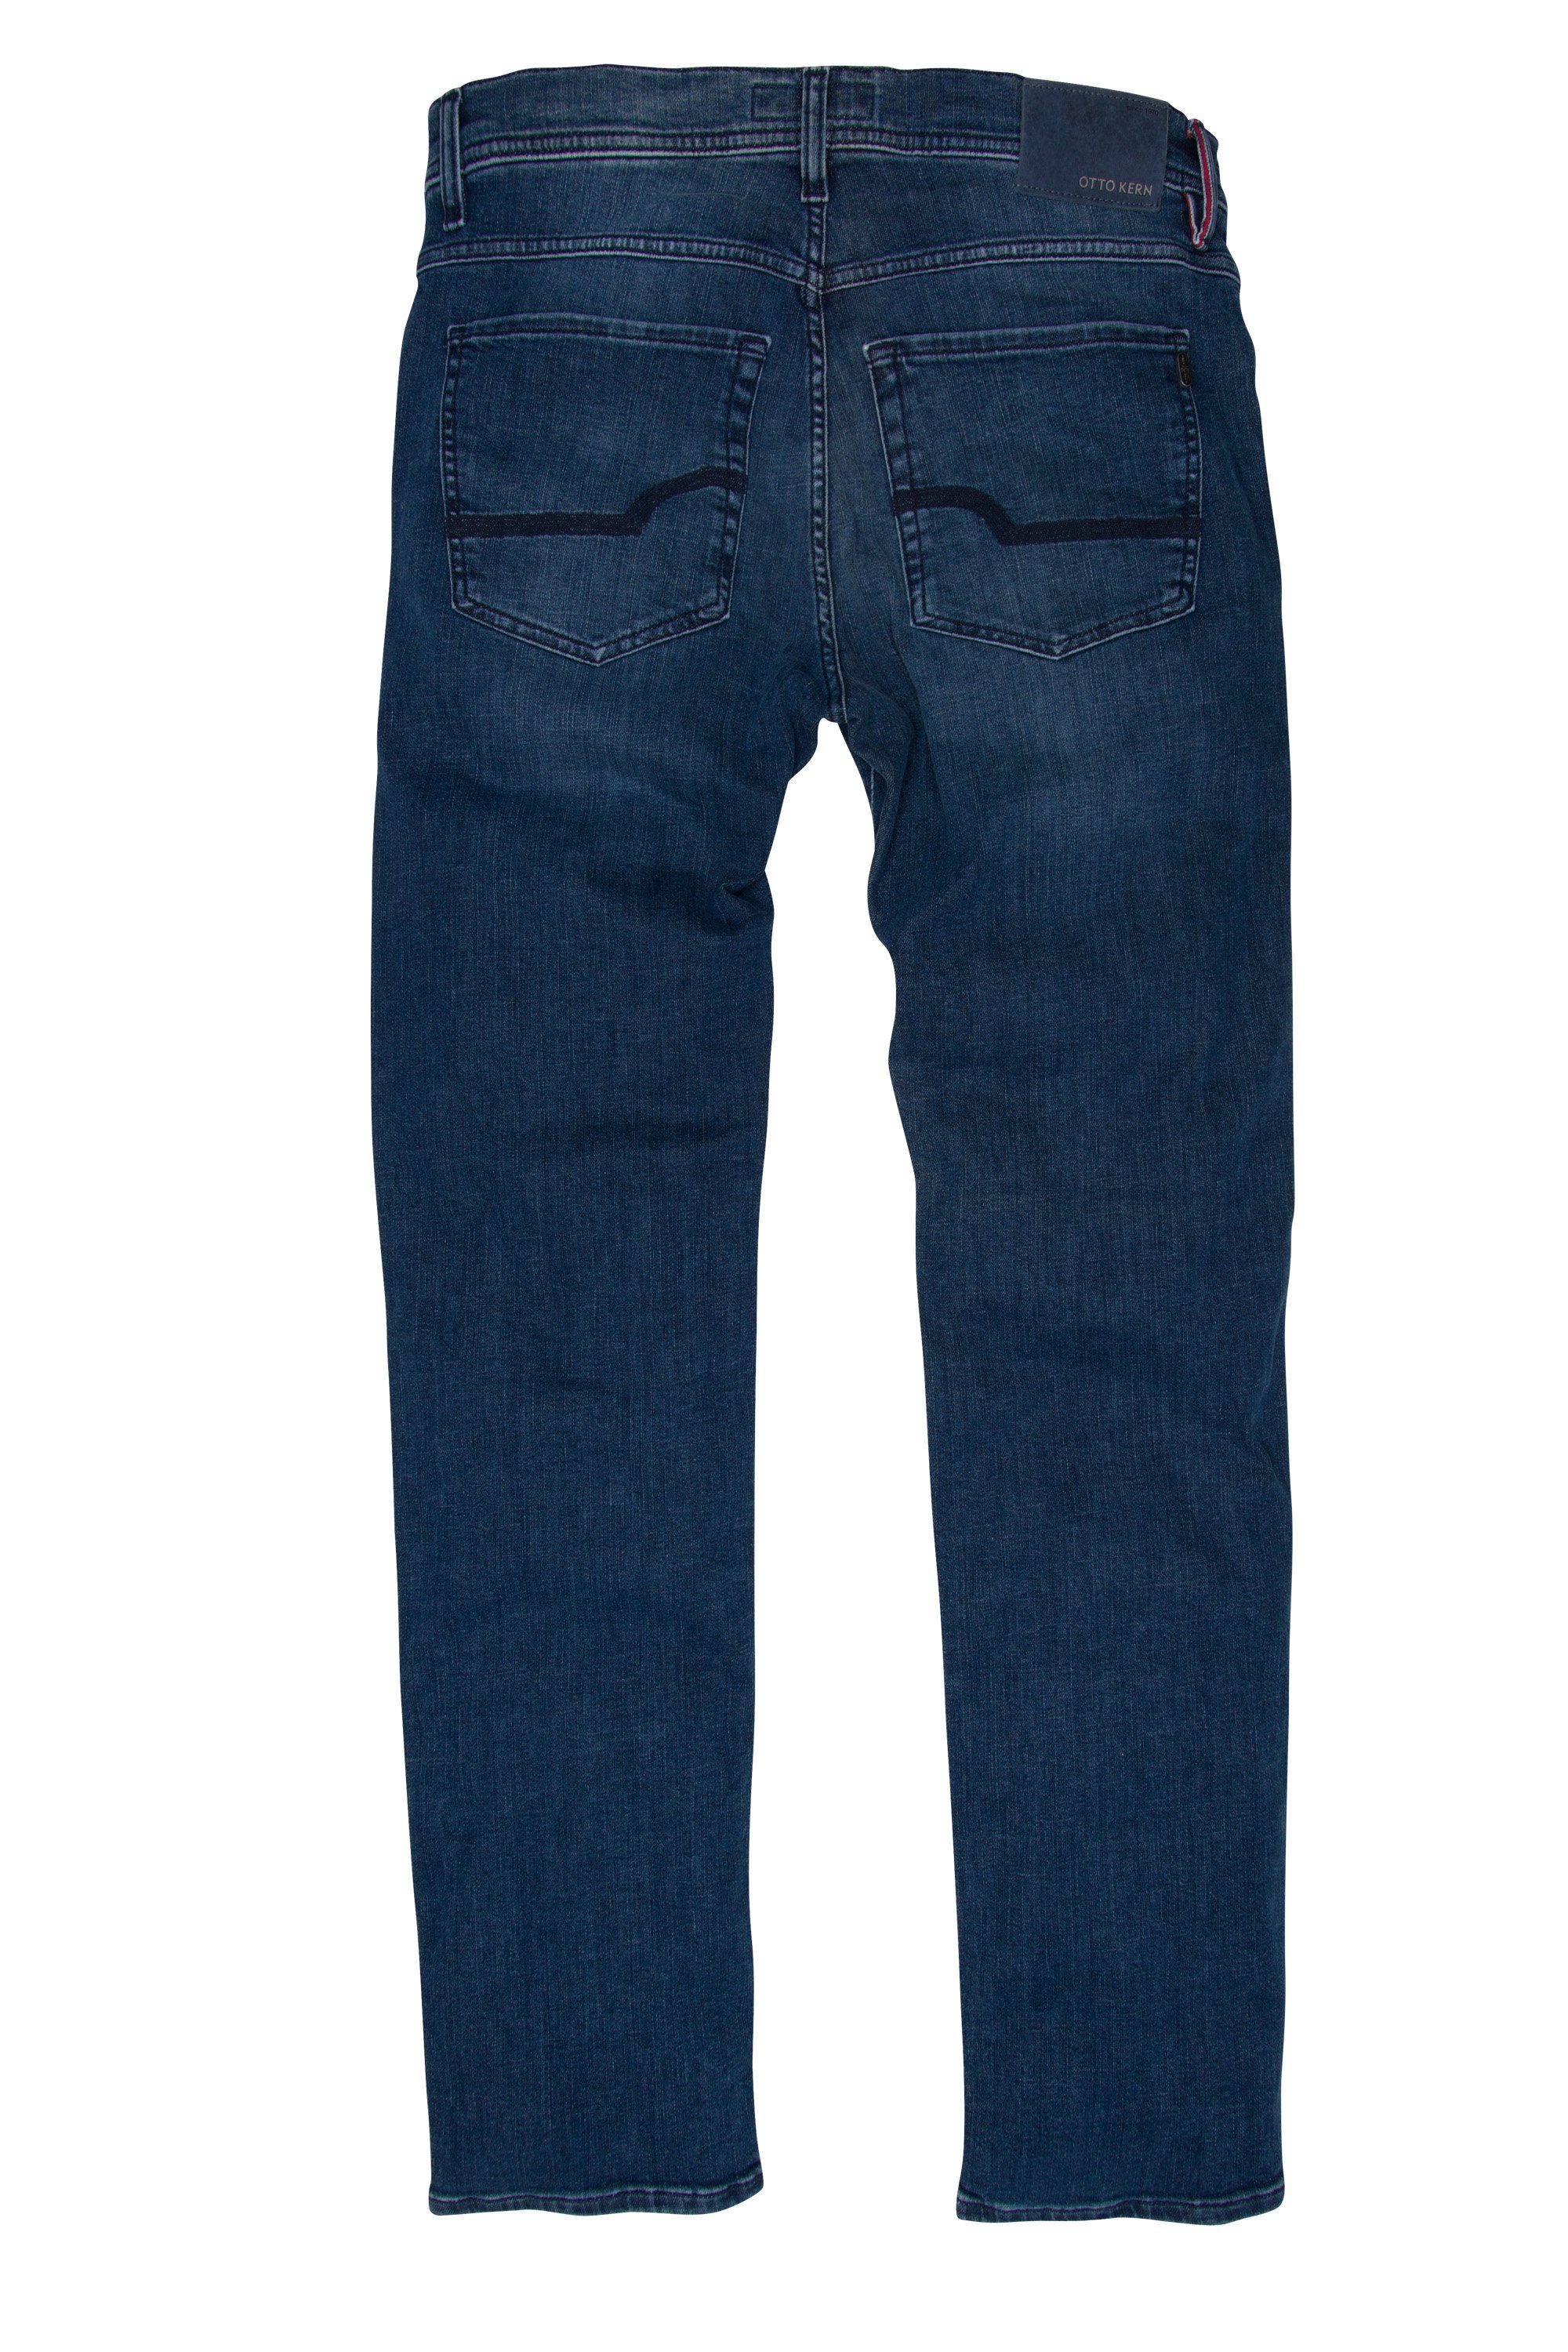 Herren Jeans Otto Kern 5-Pocket-Jeans OTTO KERN JOHN medium blue used buffies 67042